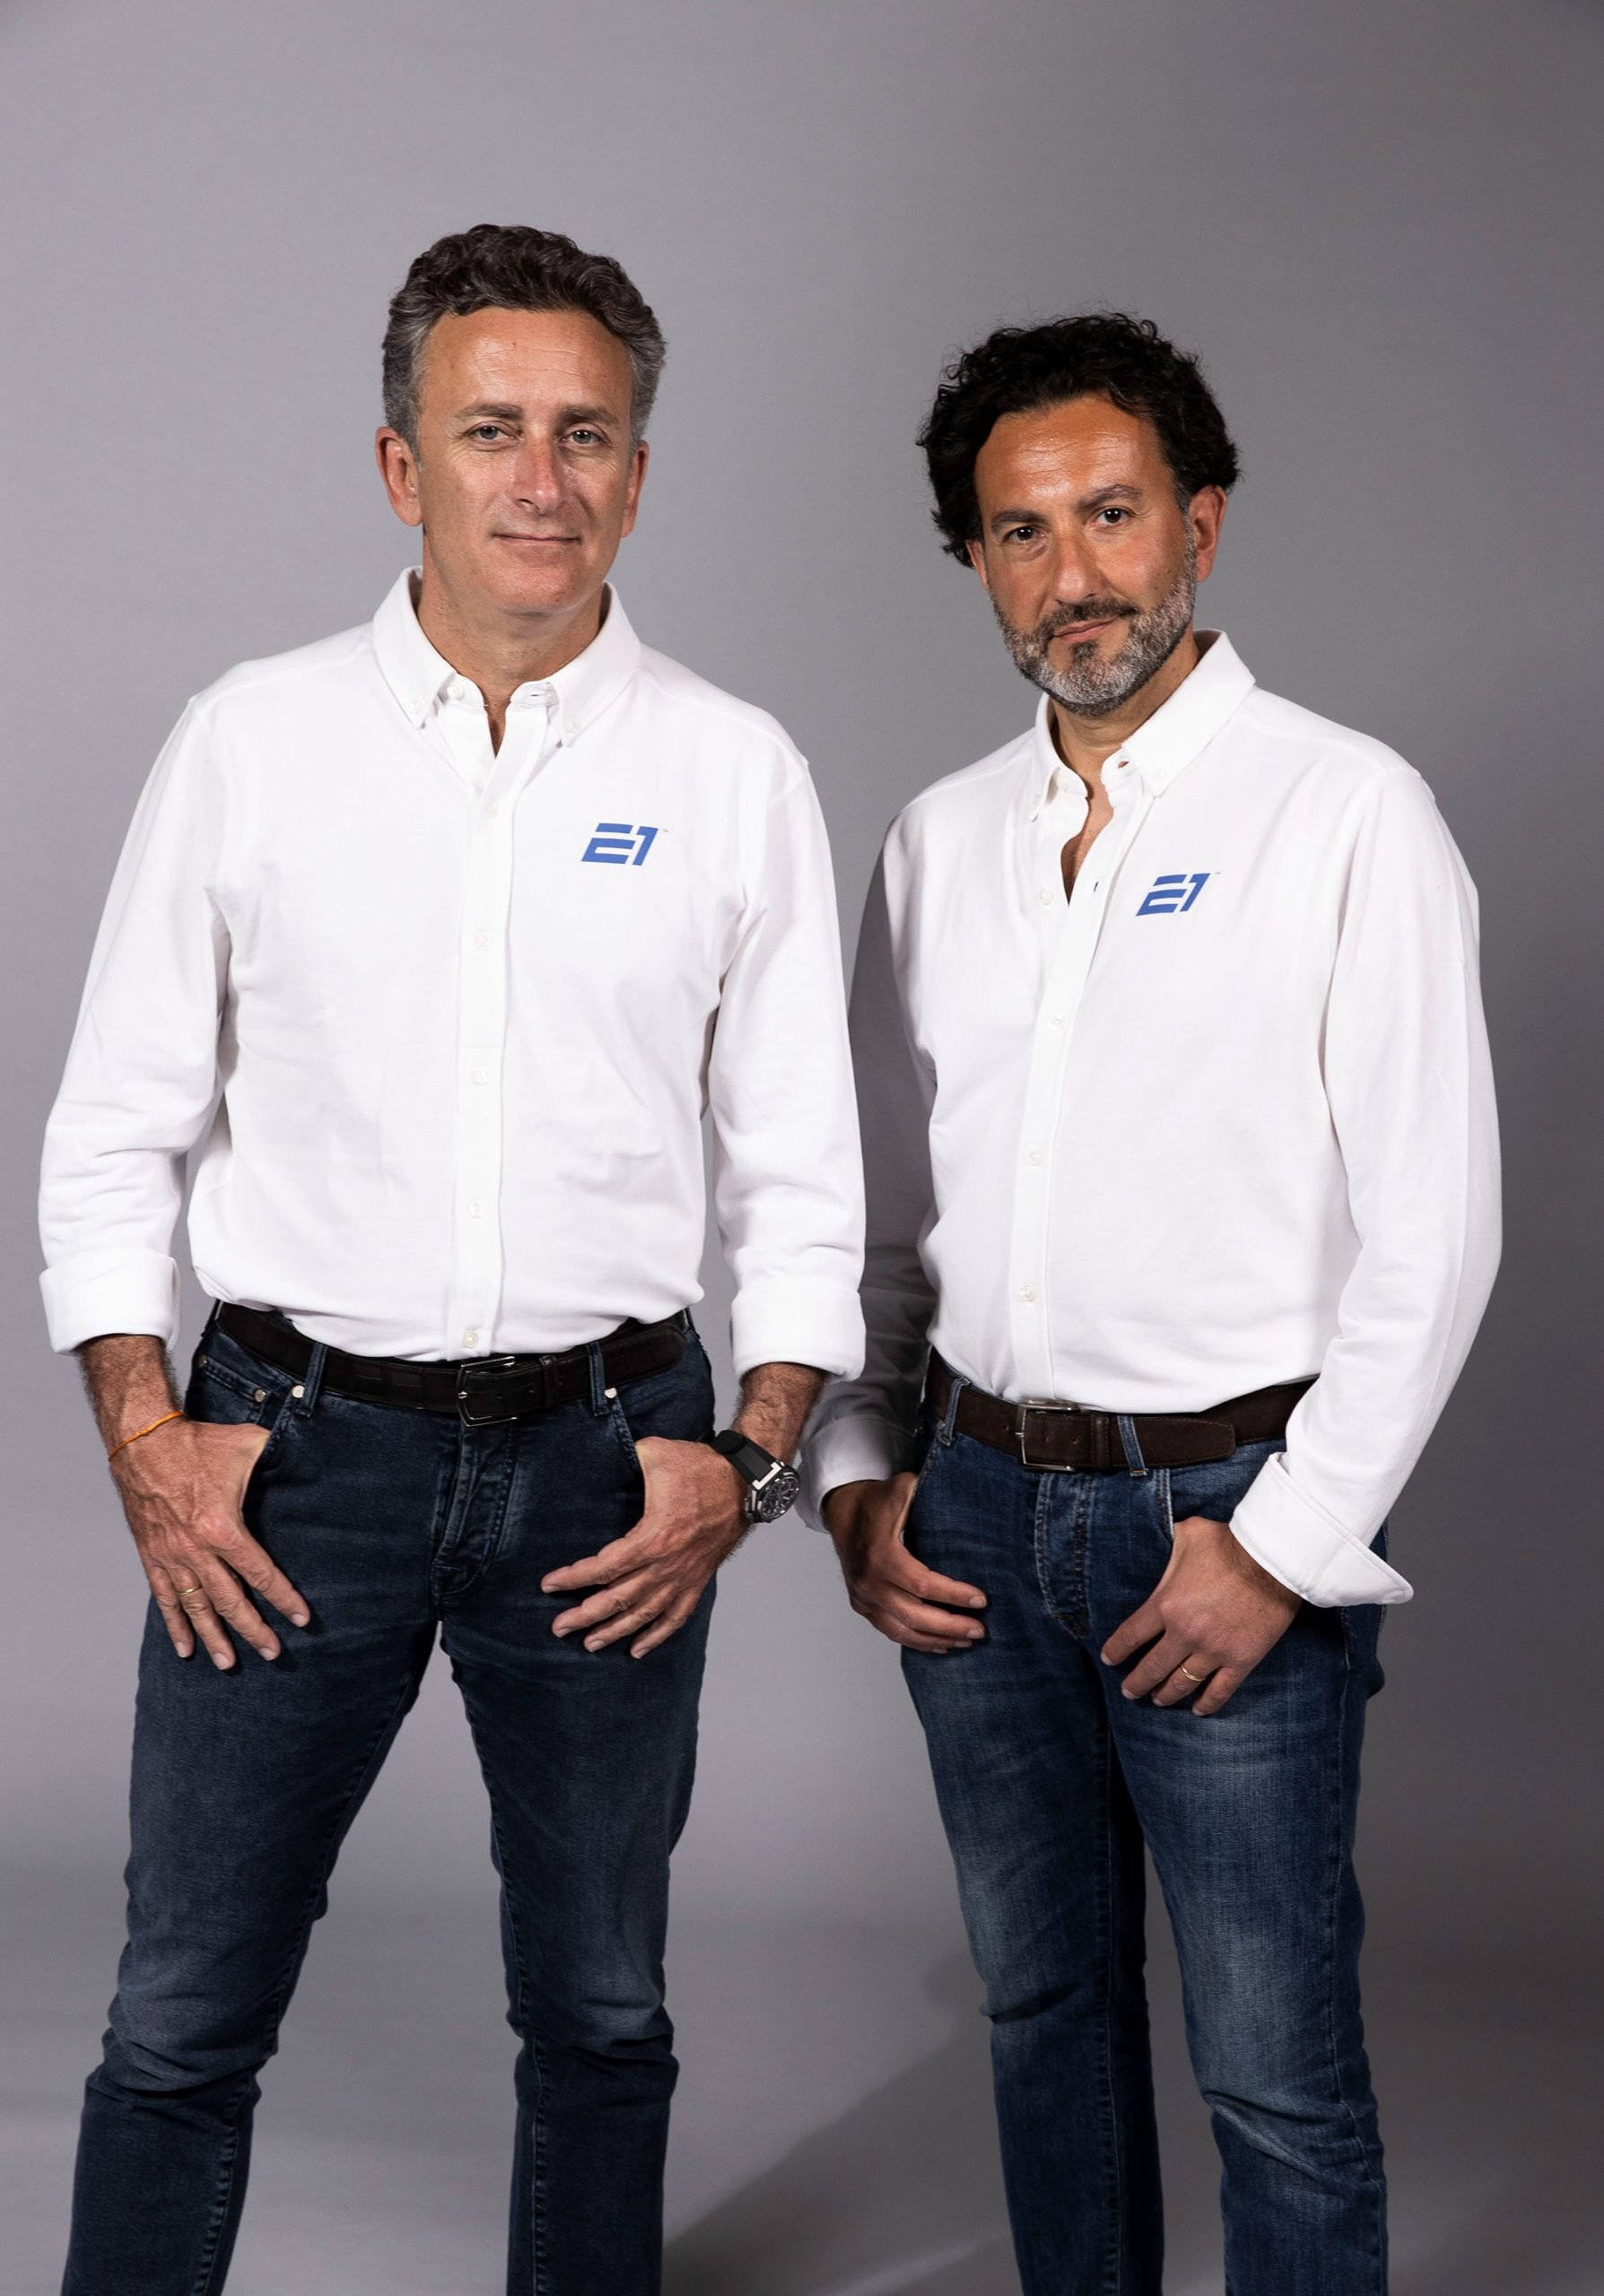 E1 Series founders Alejandro Agag and Rodi Basso